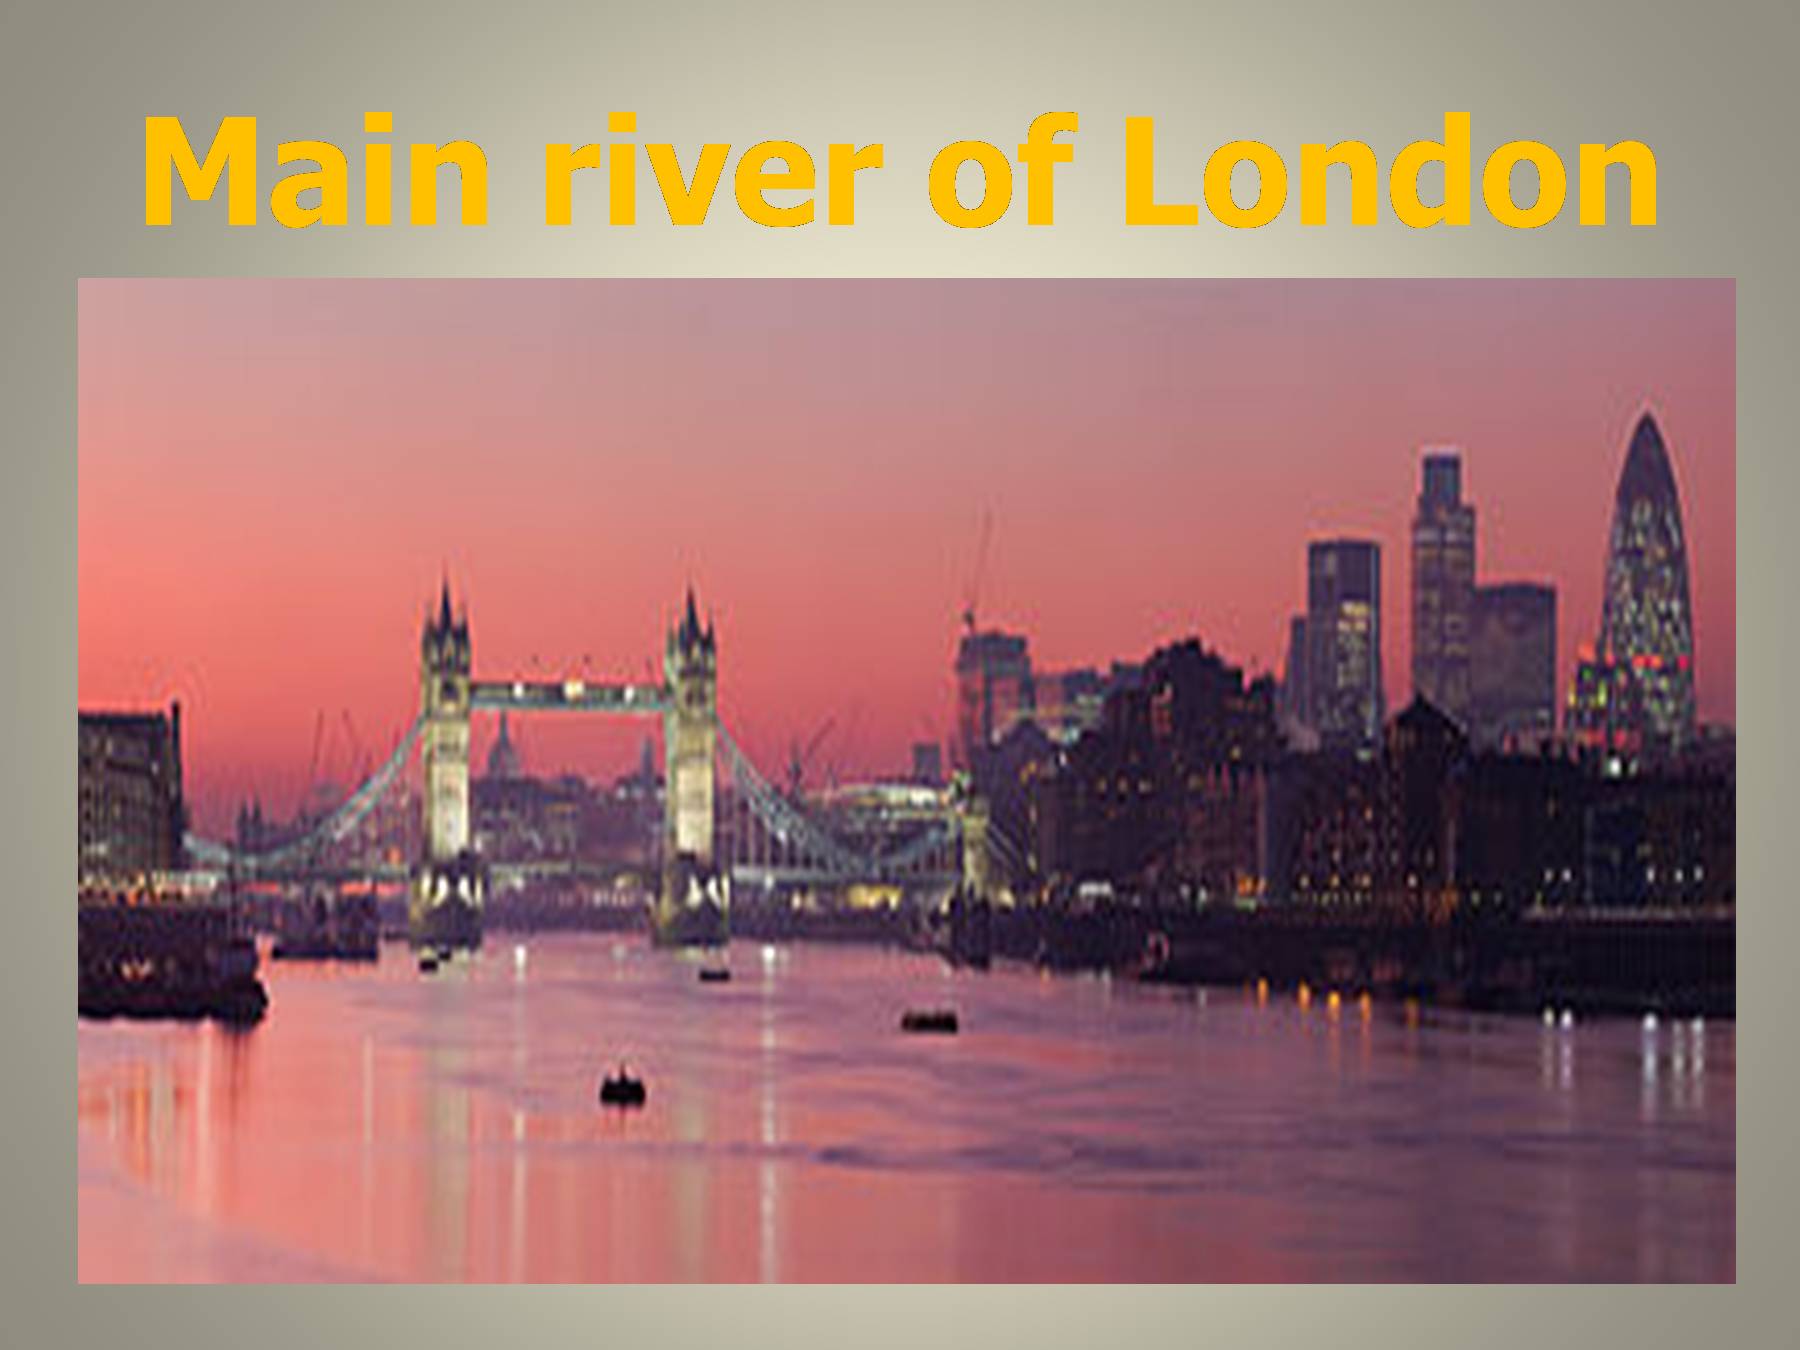 Leave for london. Река Темза. Lot of interesting в Лондоне. The main River in London. Молли реки Лондона.